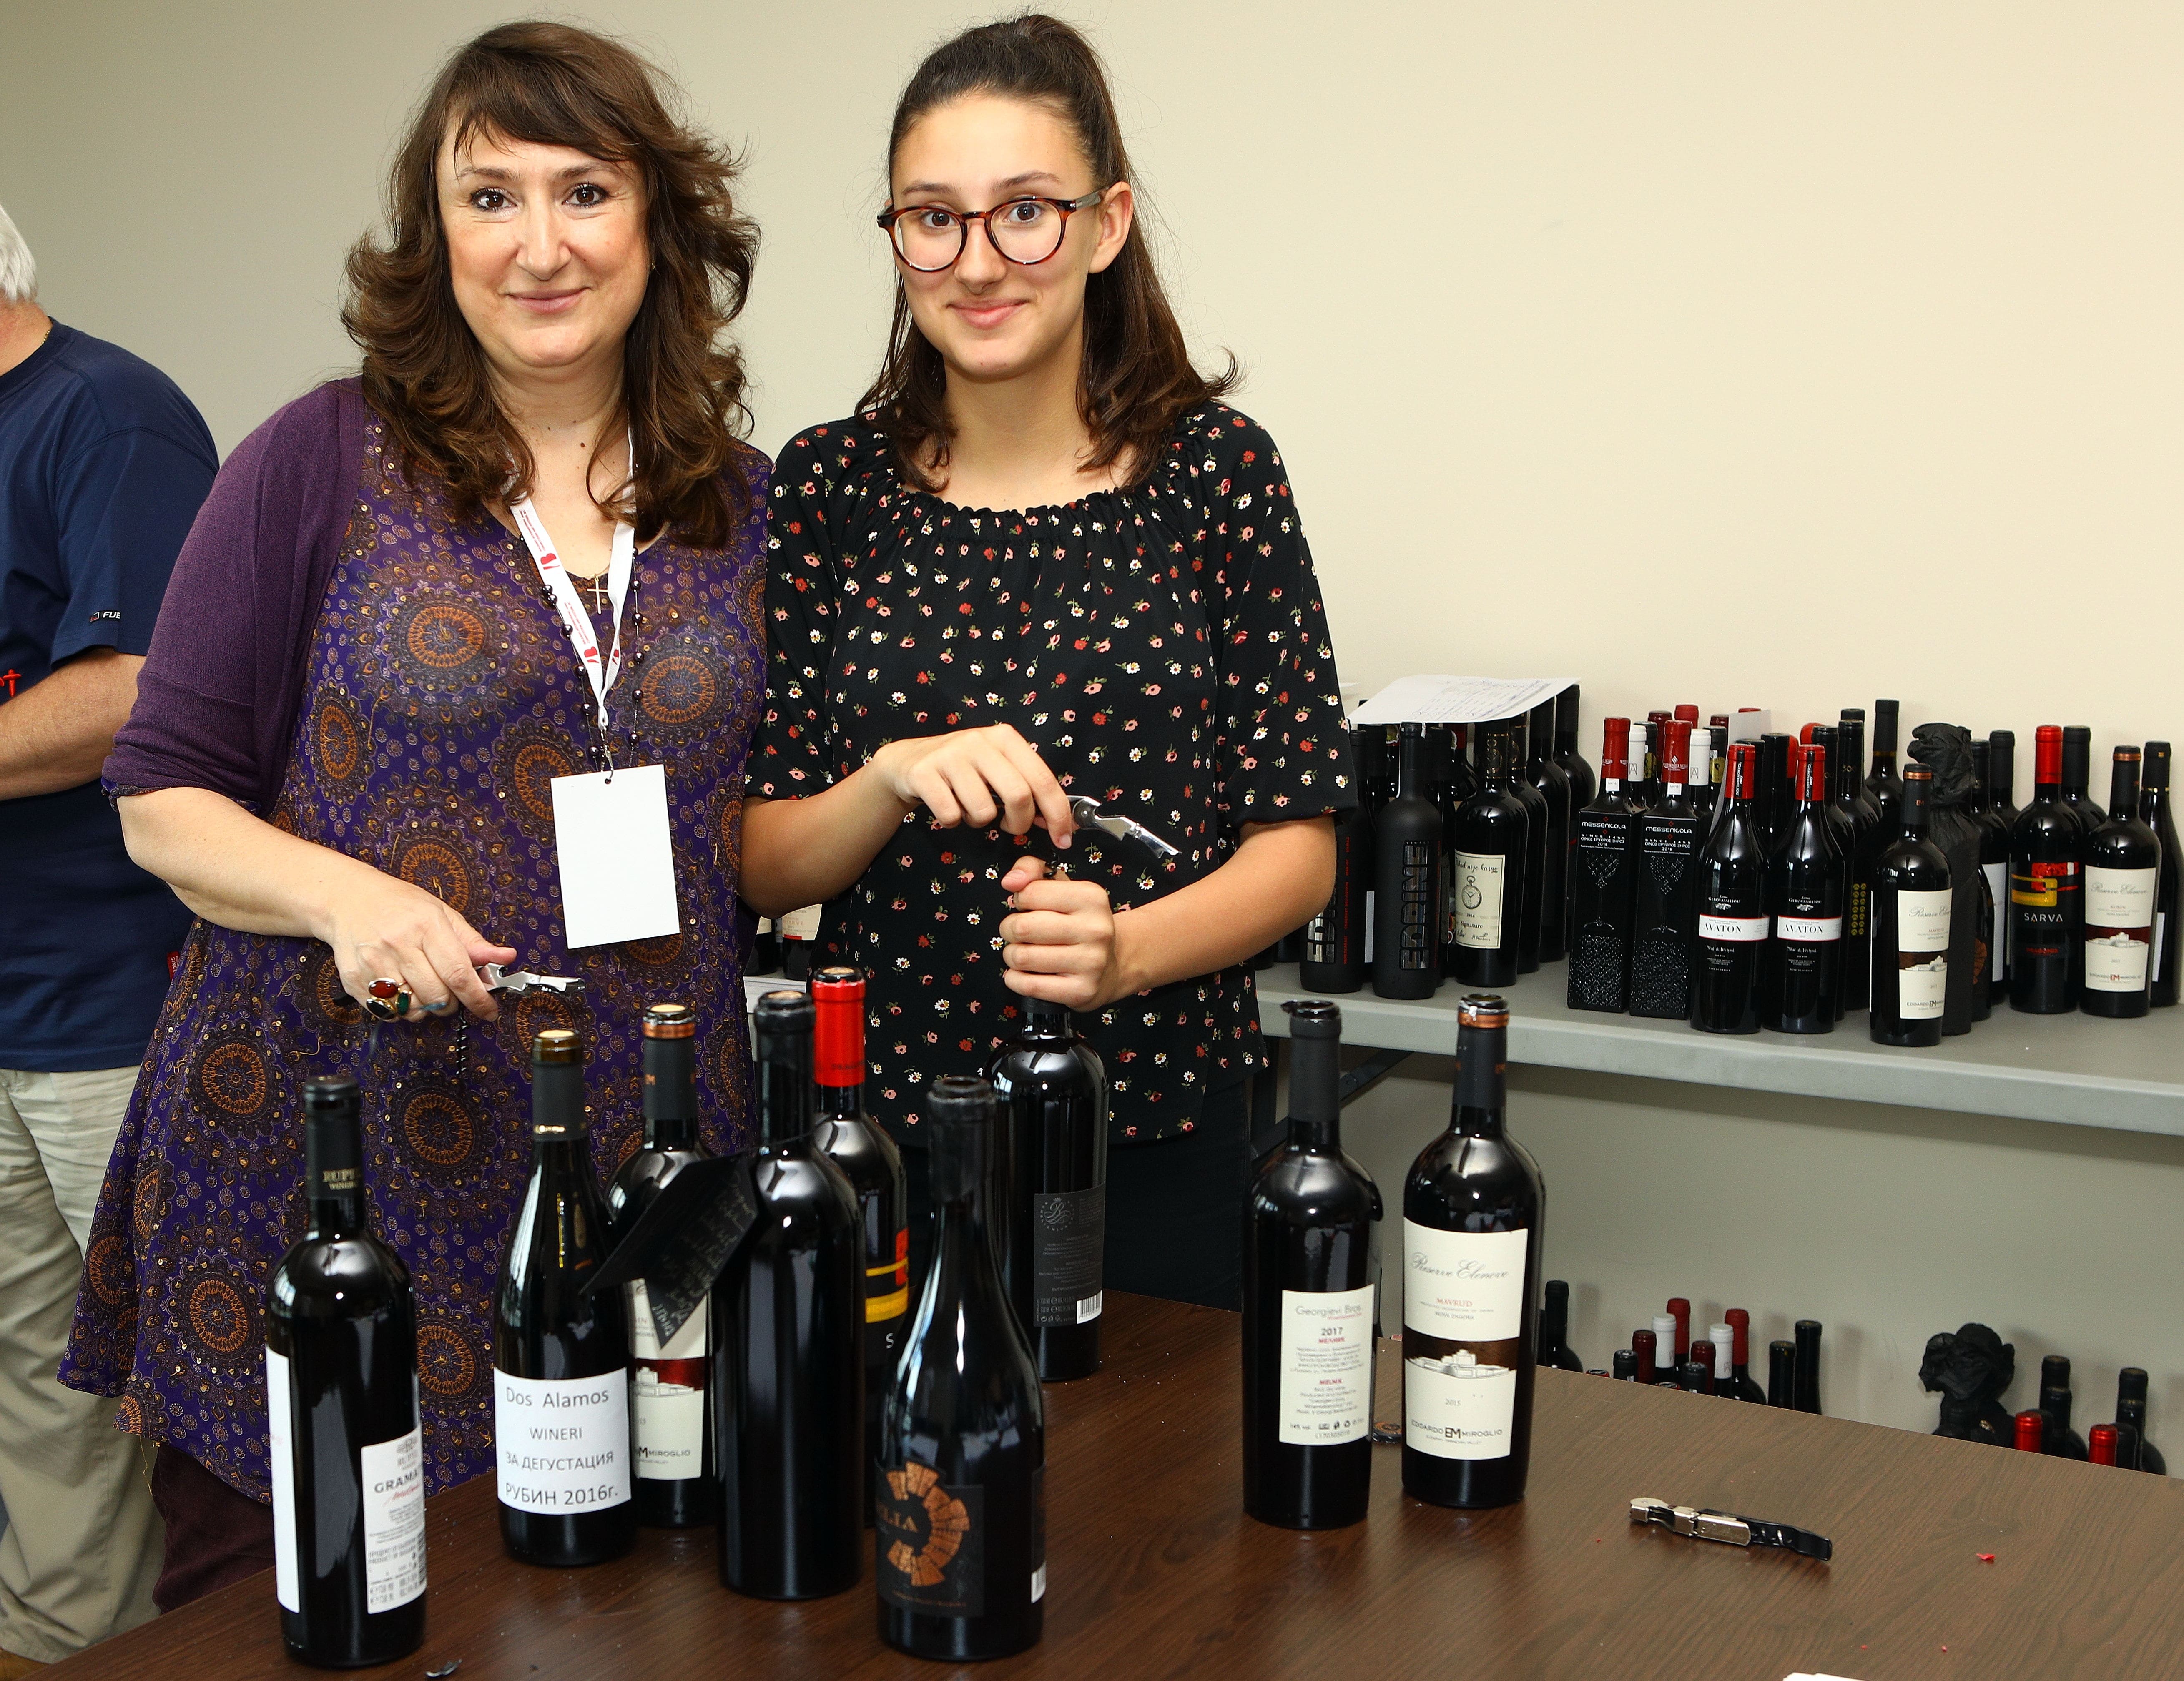 Belgrade Hosts the Balkans International Wine Competition (BIWC) 2020 in July